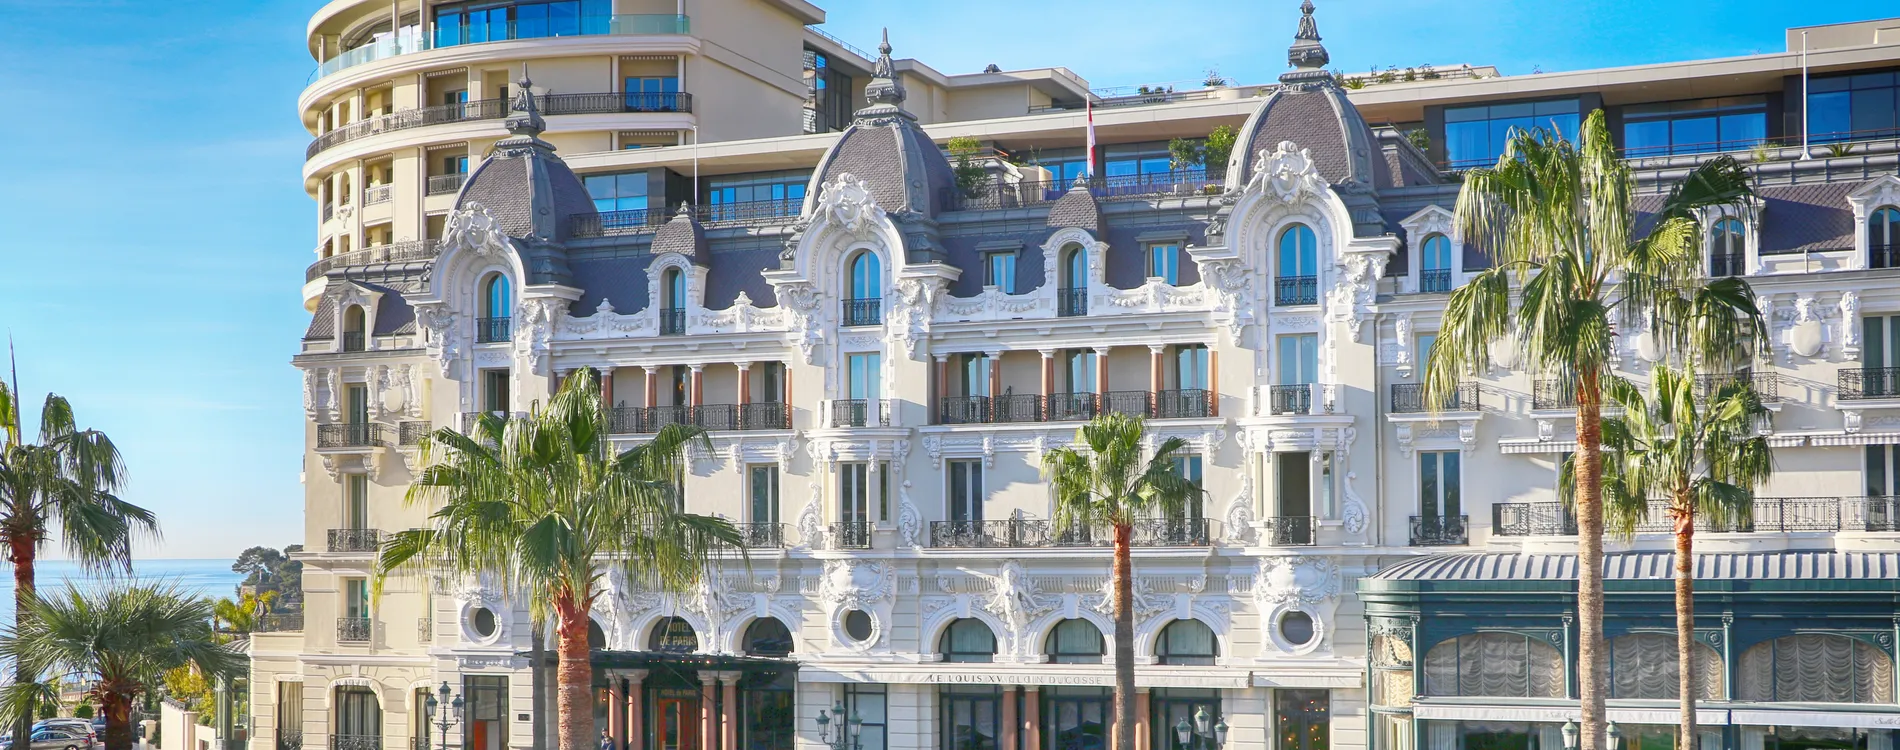 Hotel de Paris, Monaco, MC